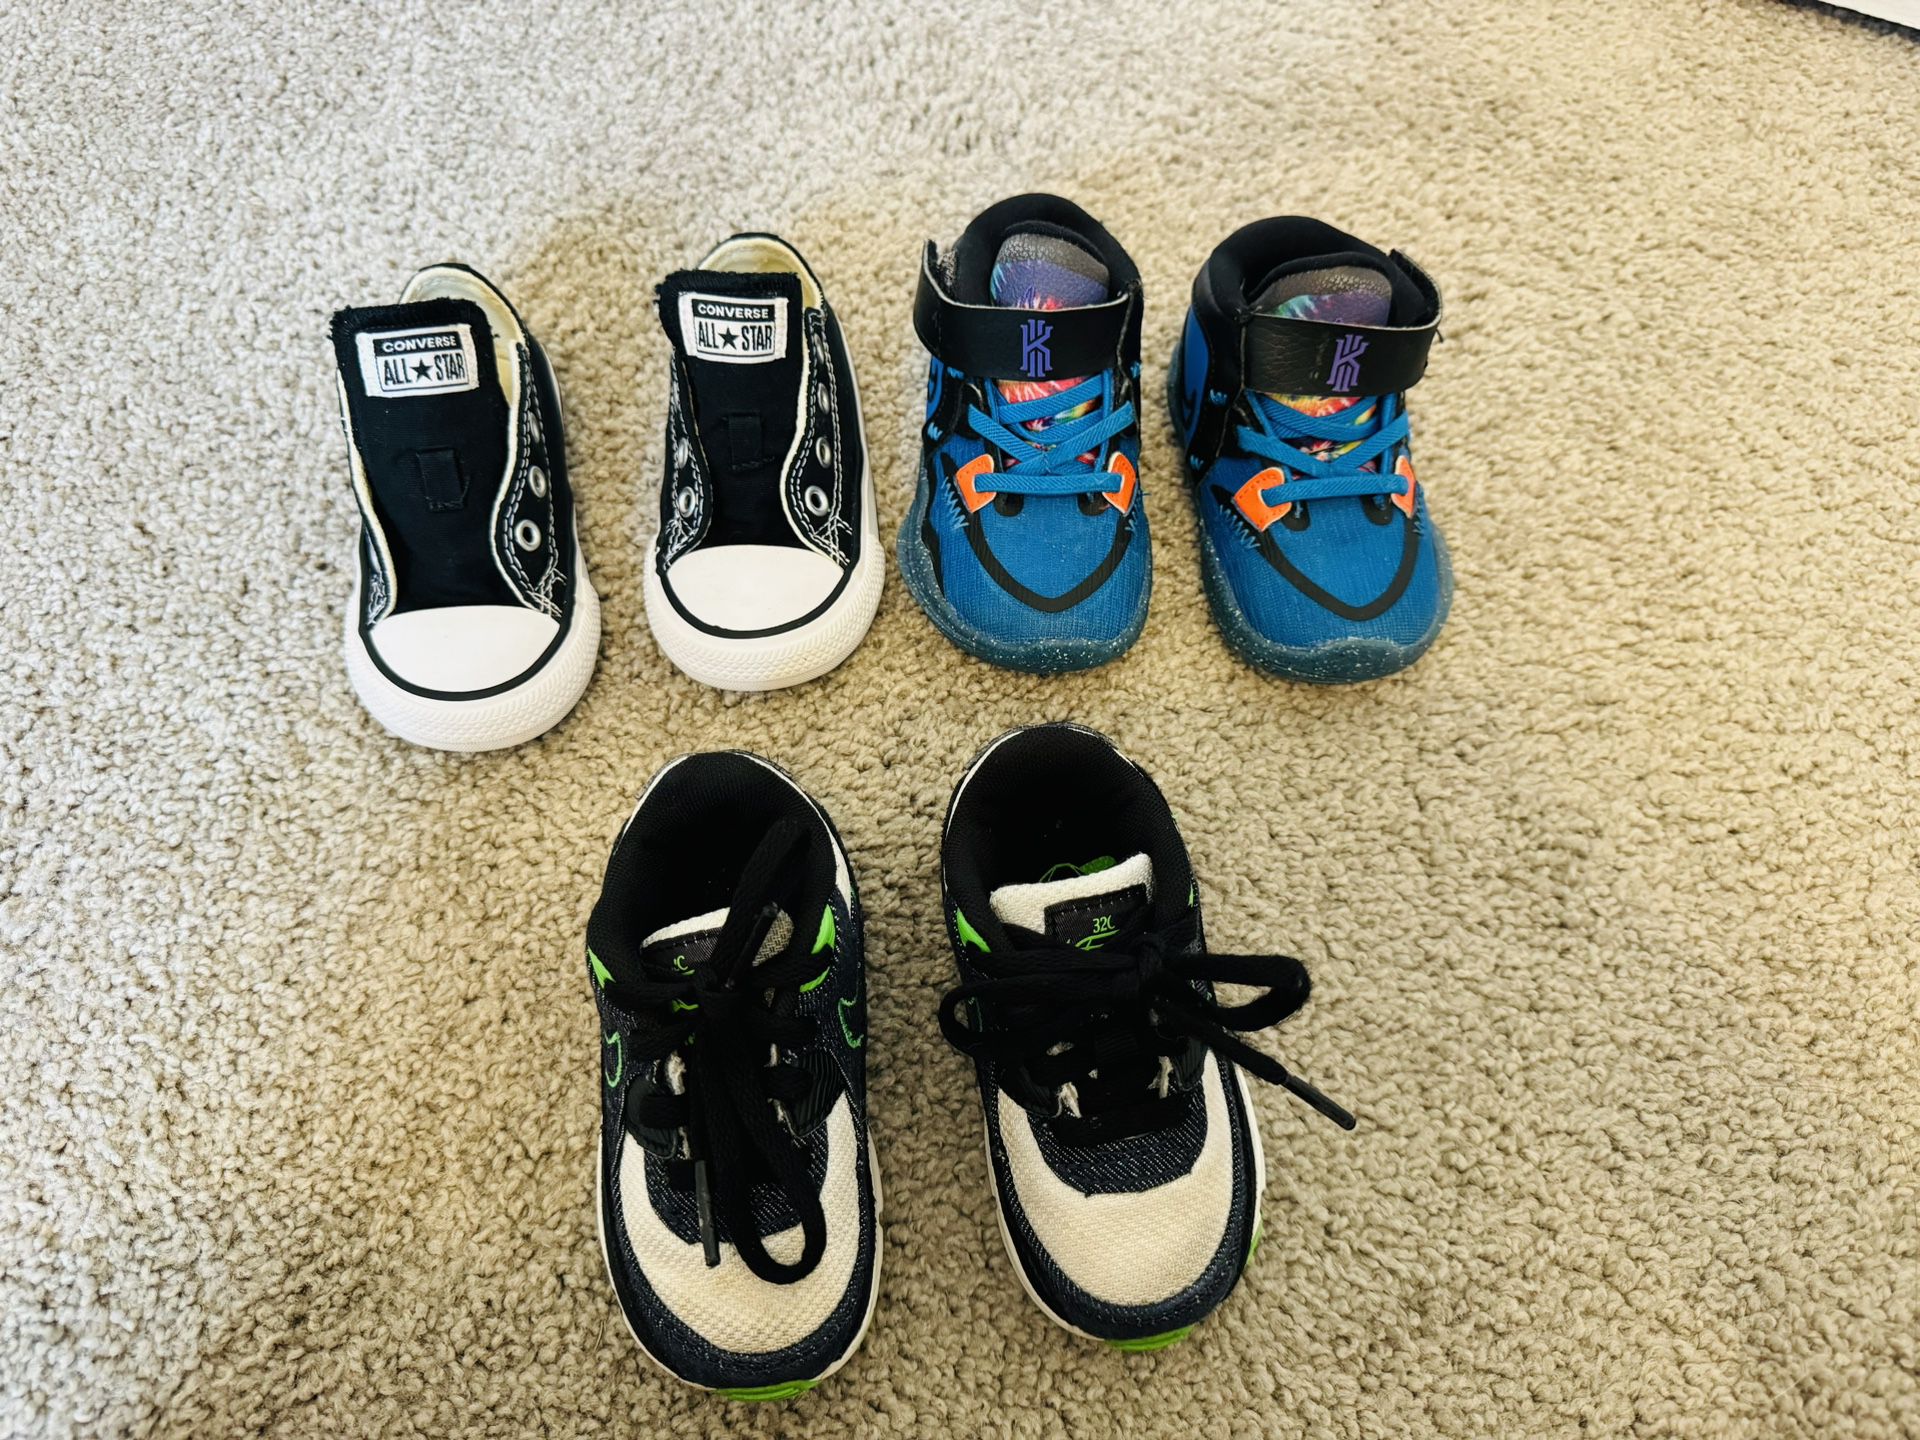 Toddler Sneakers Nike, Converse Size 5 Bundle